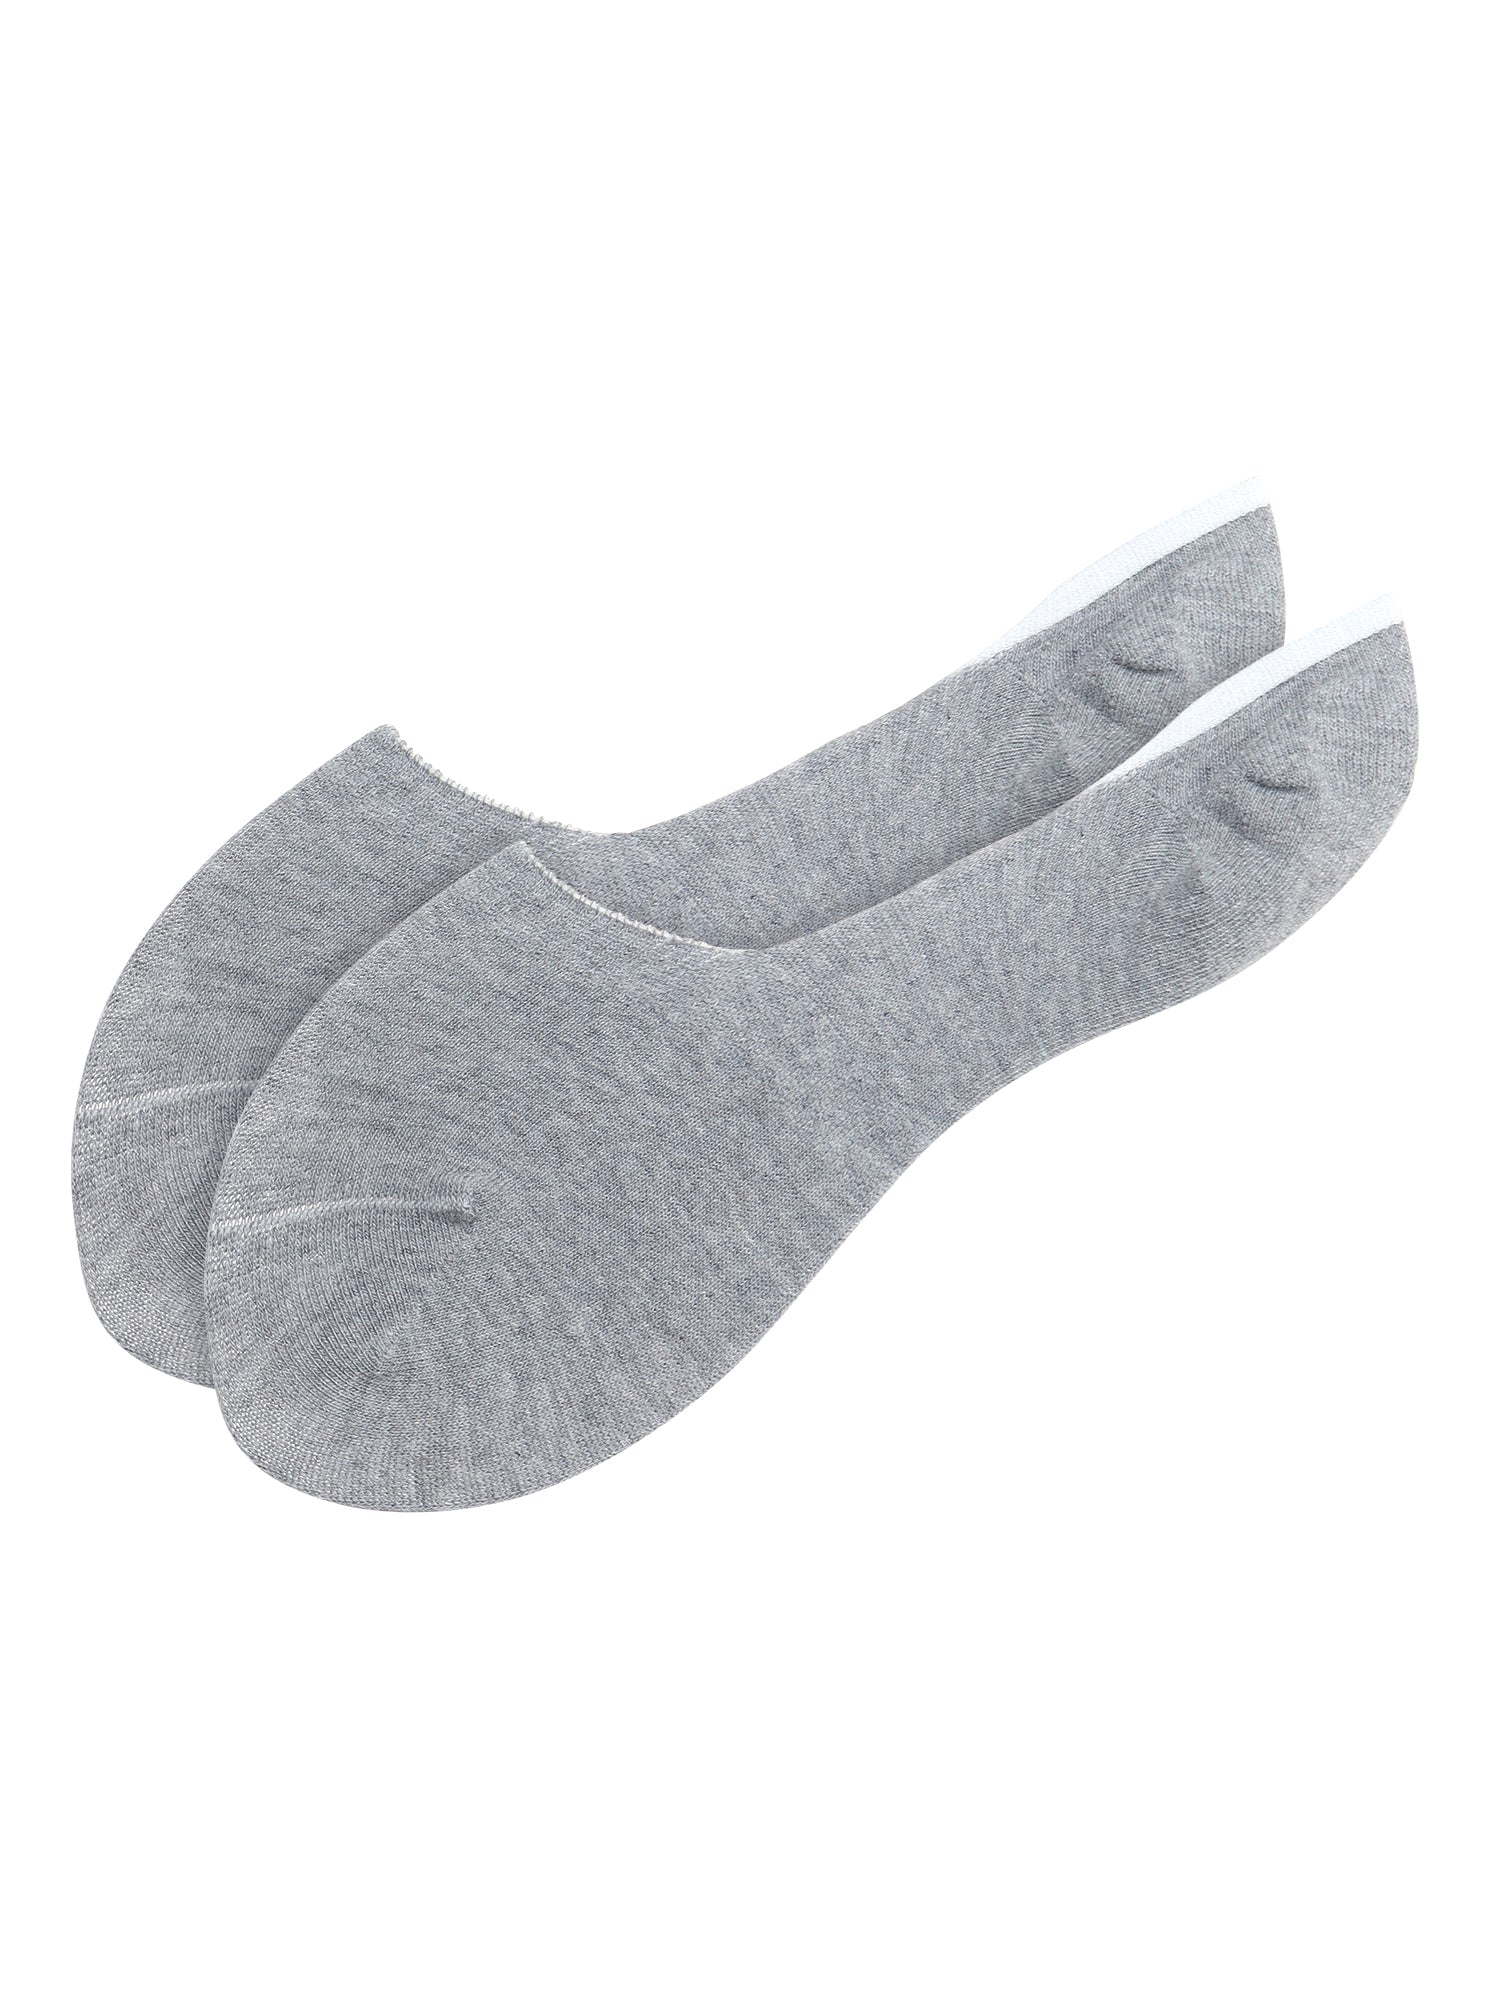 Grey Solid Non-Slip No Show Socks For Women